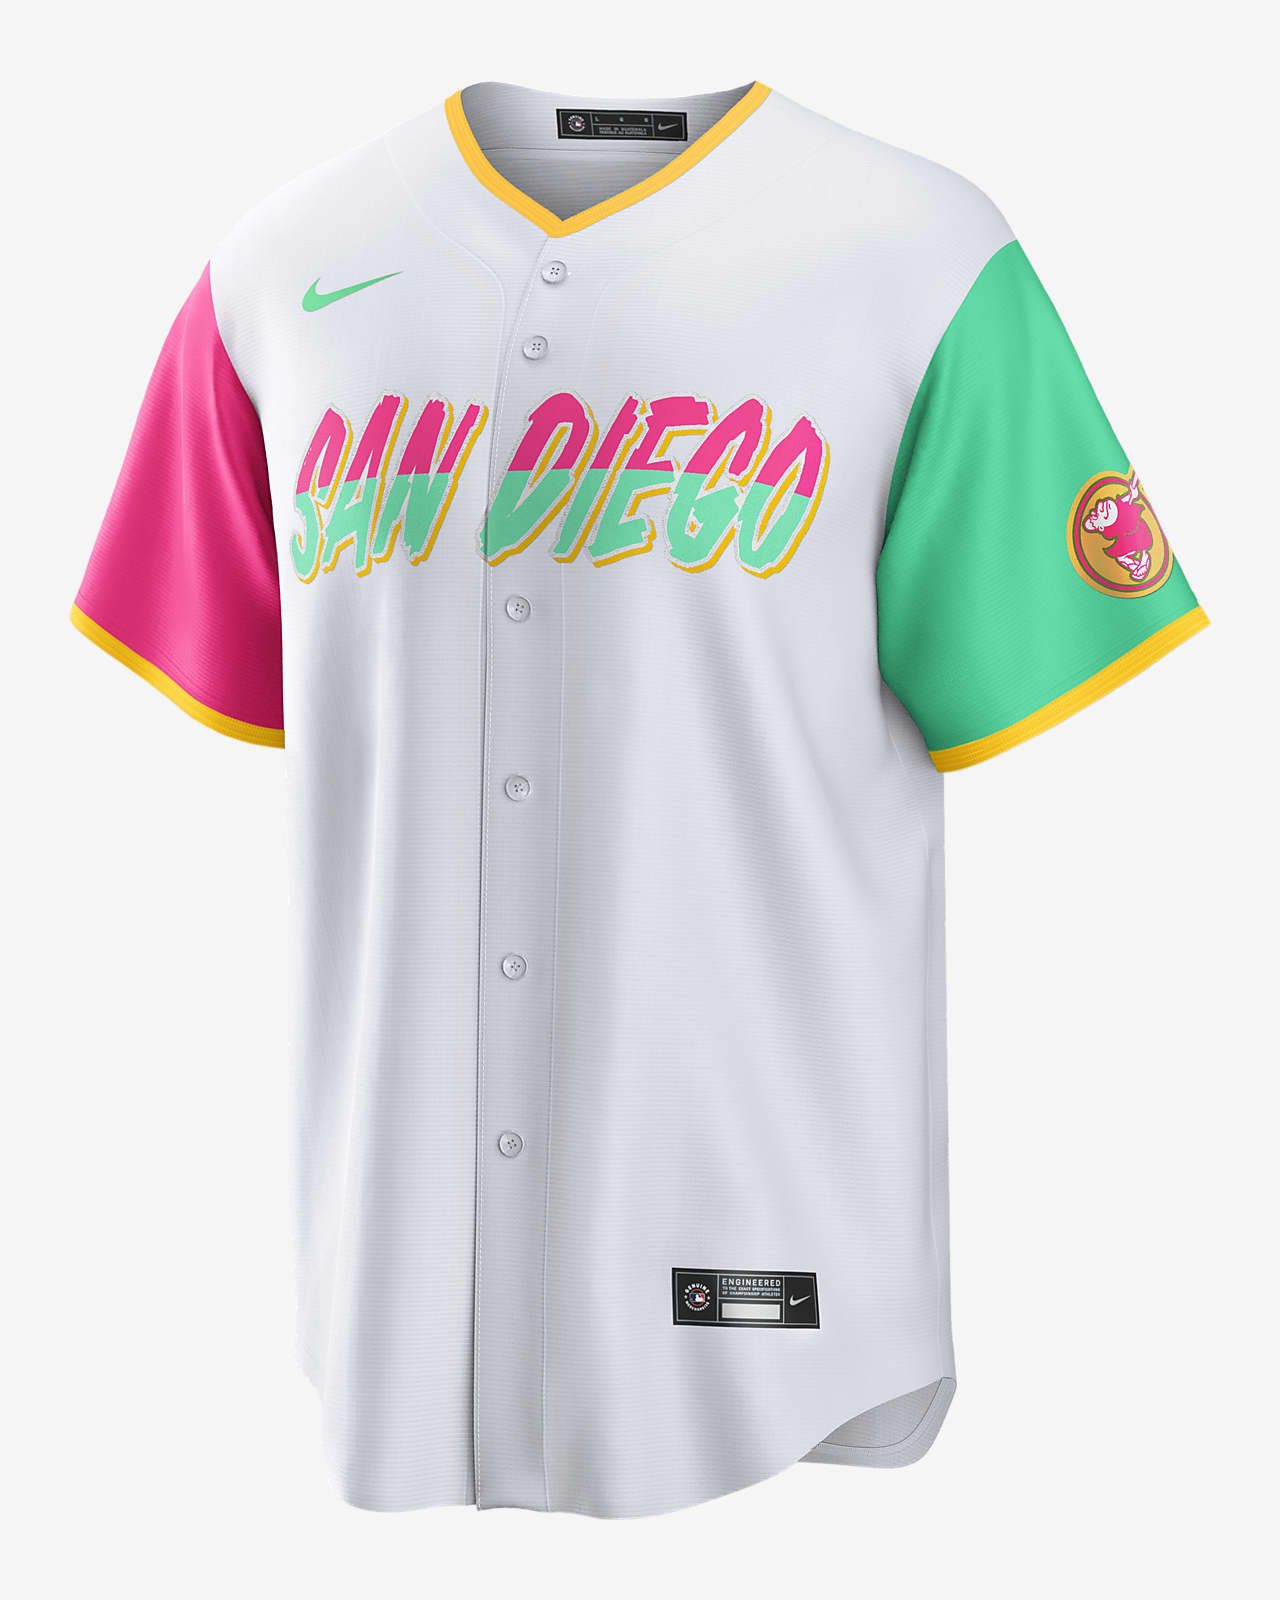 San Diego Padres release City Connect uniforms